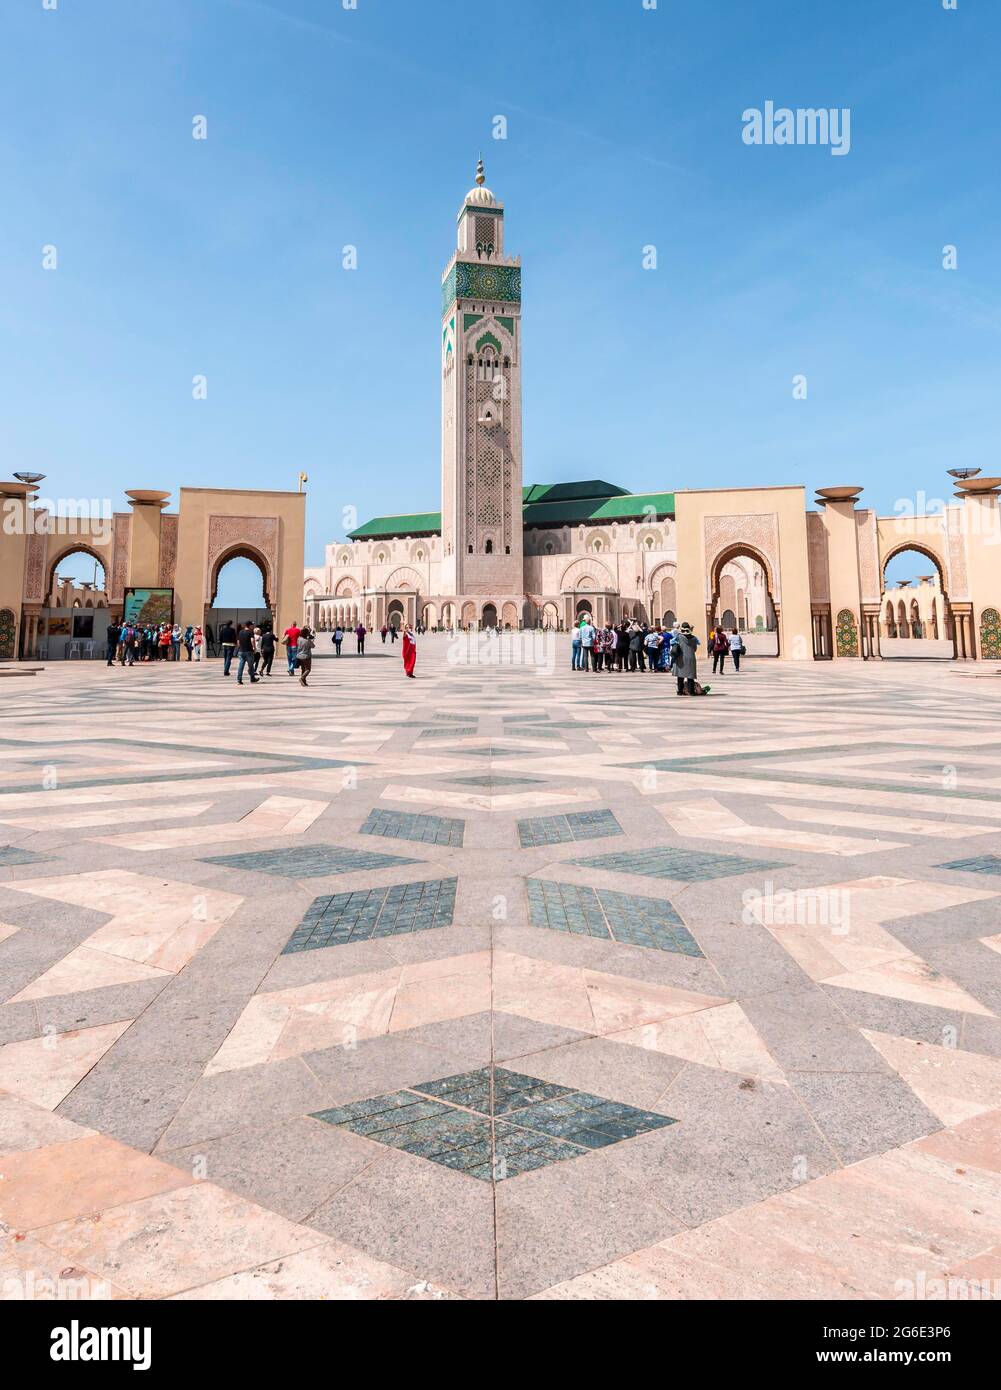 Hassan II Mosque, Grande Mosquee Hassan II, Moorish architecture, with 210m highest minaret of the world, Casablanca, Morocco Stock Photo